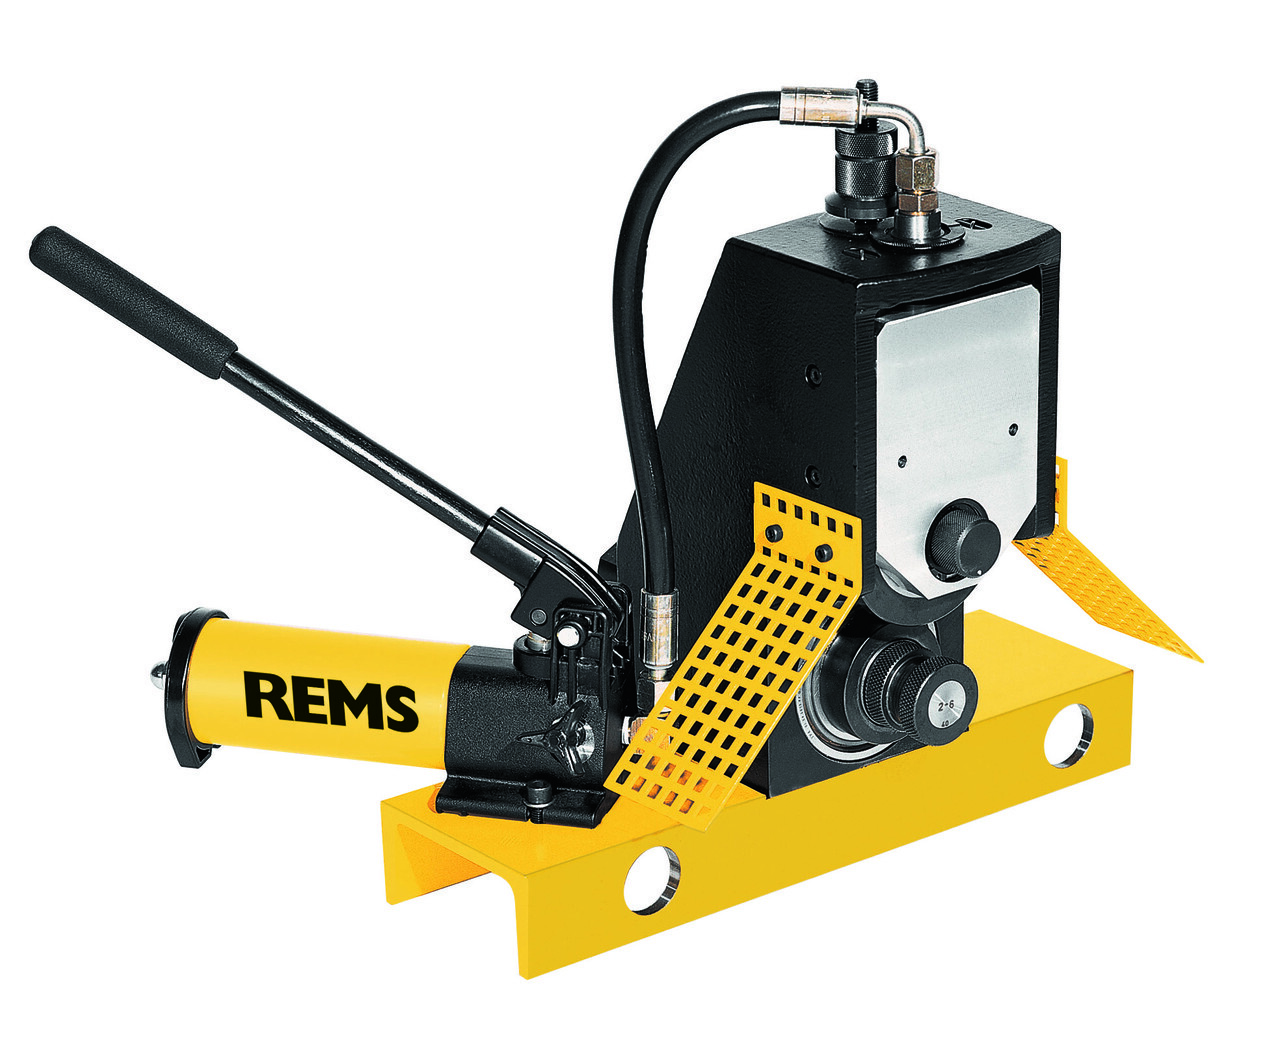 REMS 347006 Collum RG Rolgroefmachine - 1200W